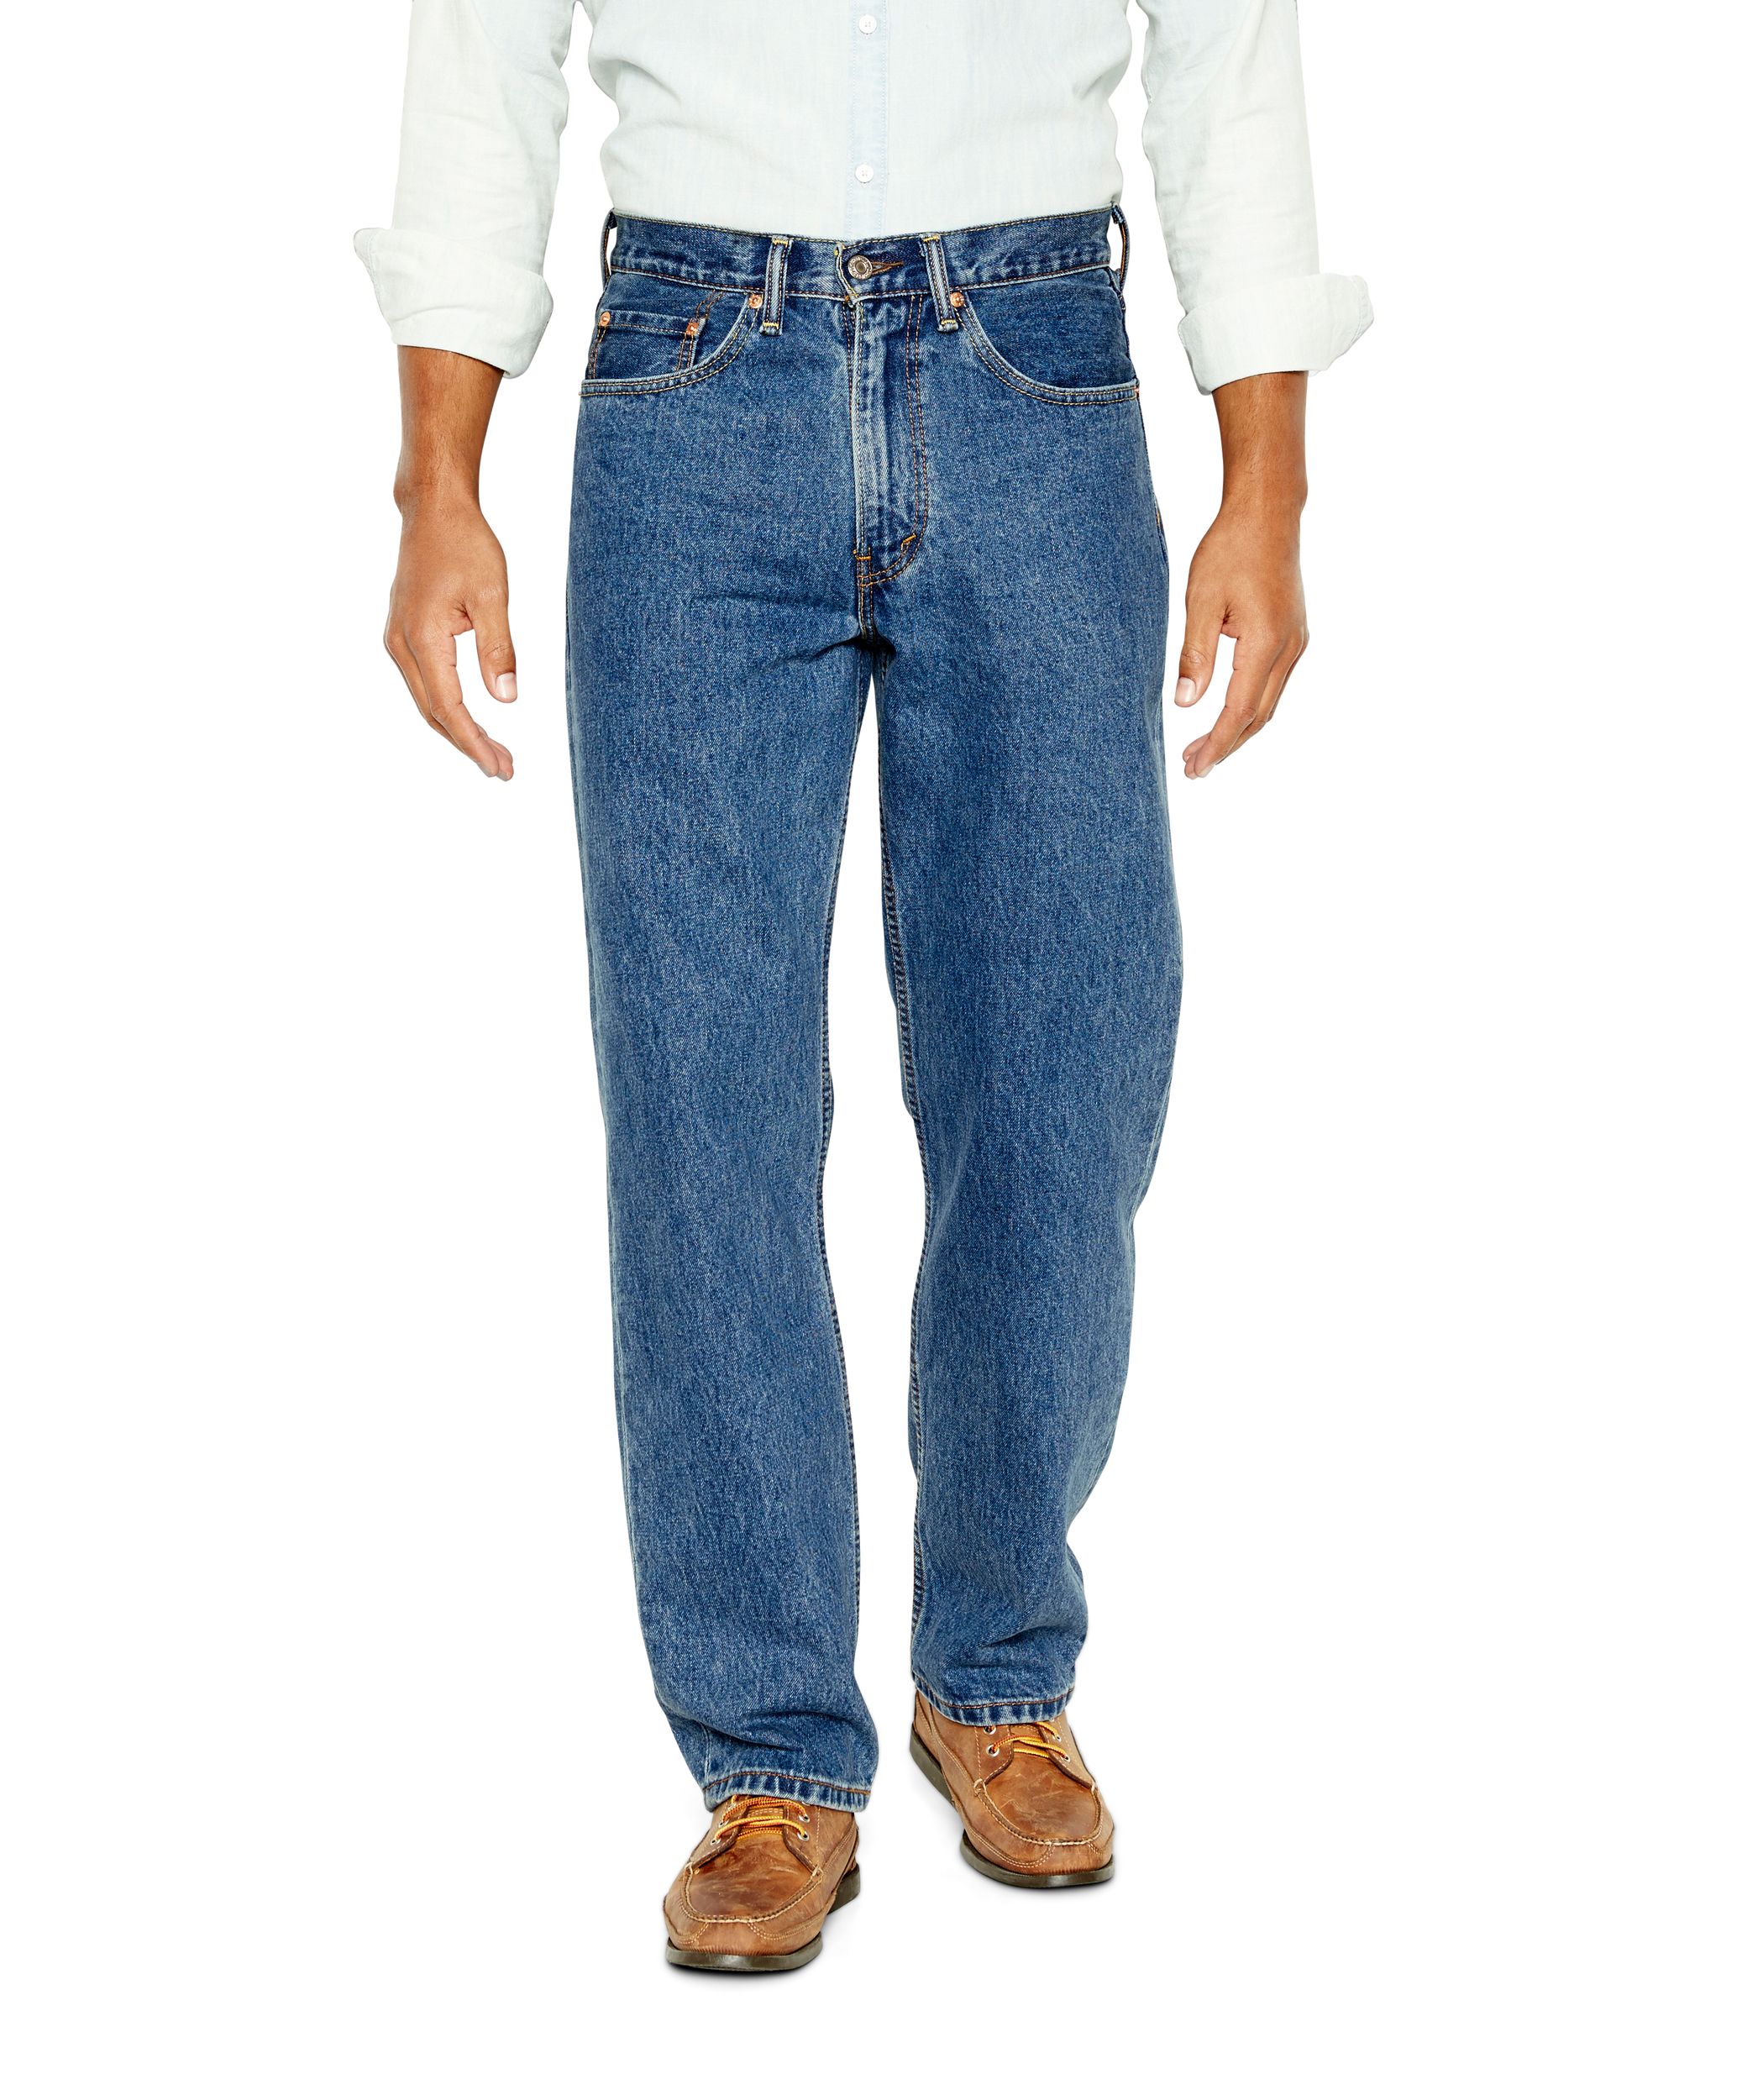 Levi's Men's 550 Relaxed Fit Medium Stonewash Jeans - Denim | Marks